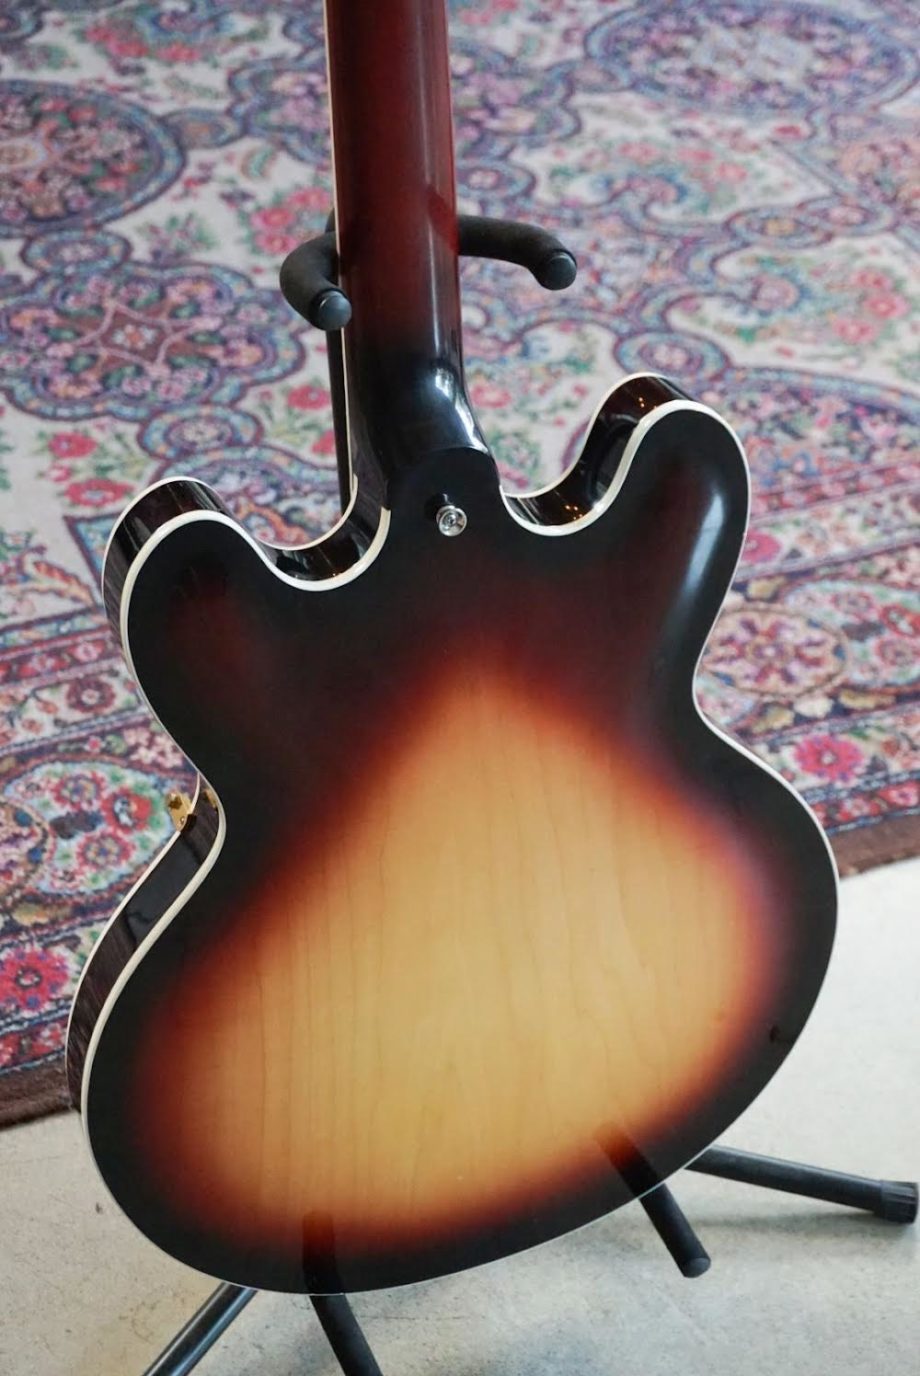 2010 Gibson CS ES-345 B.B. King